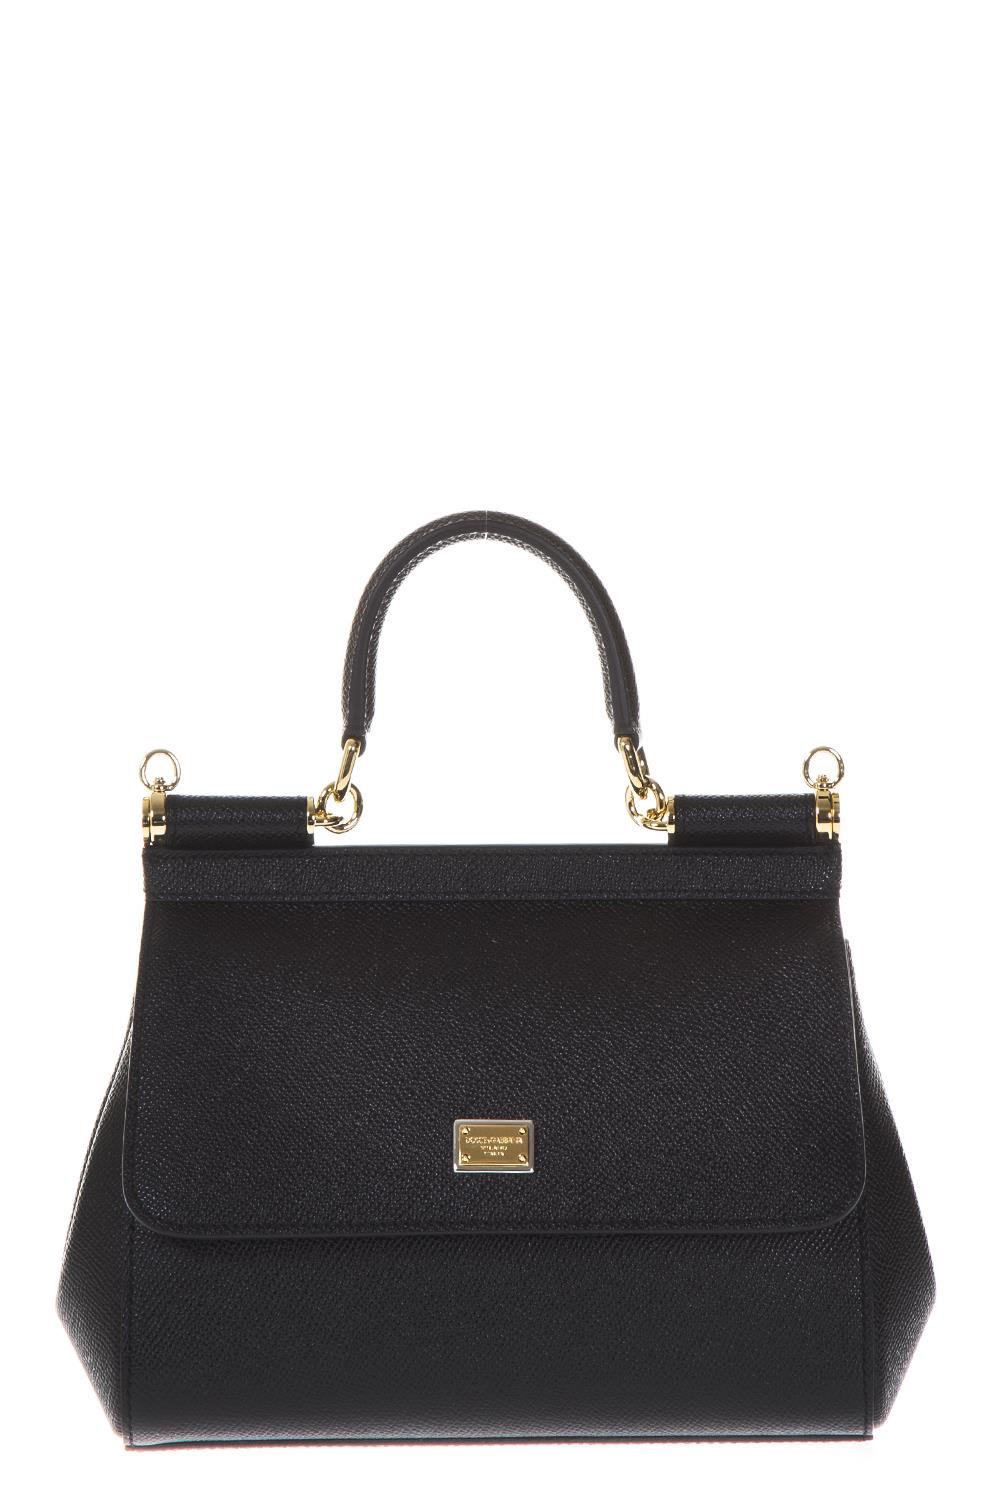 Dolce & Gabbana Mini Sicily Black Leather Bag